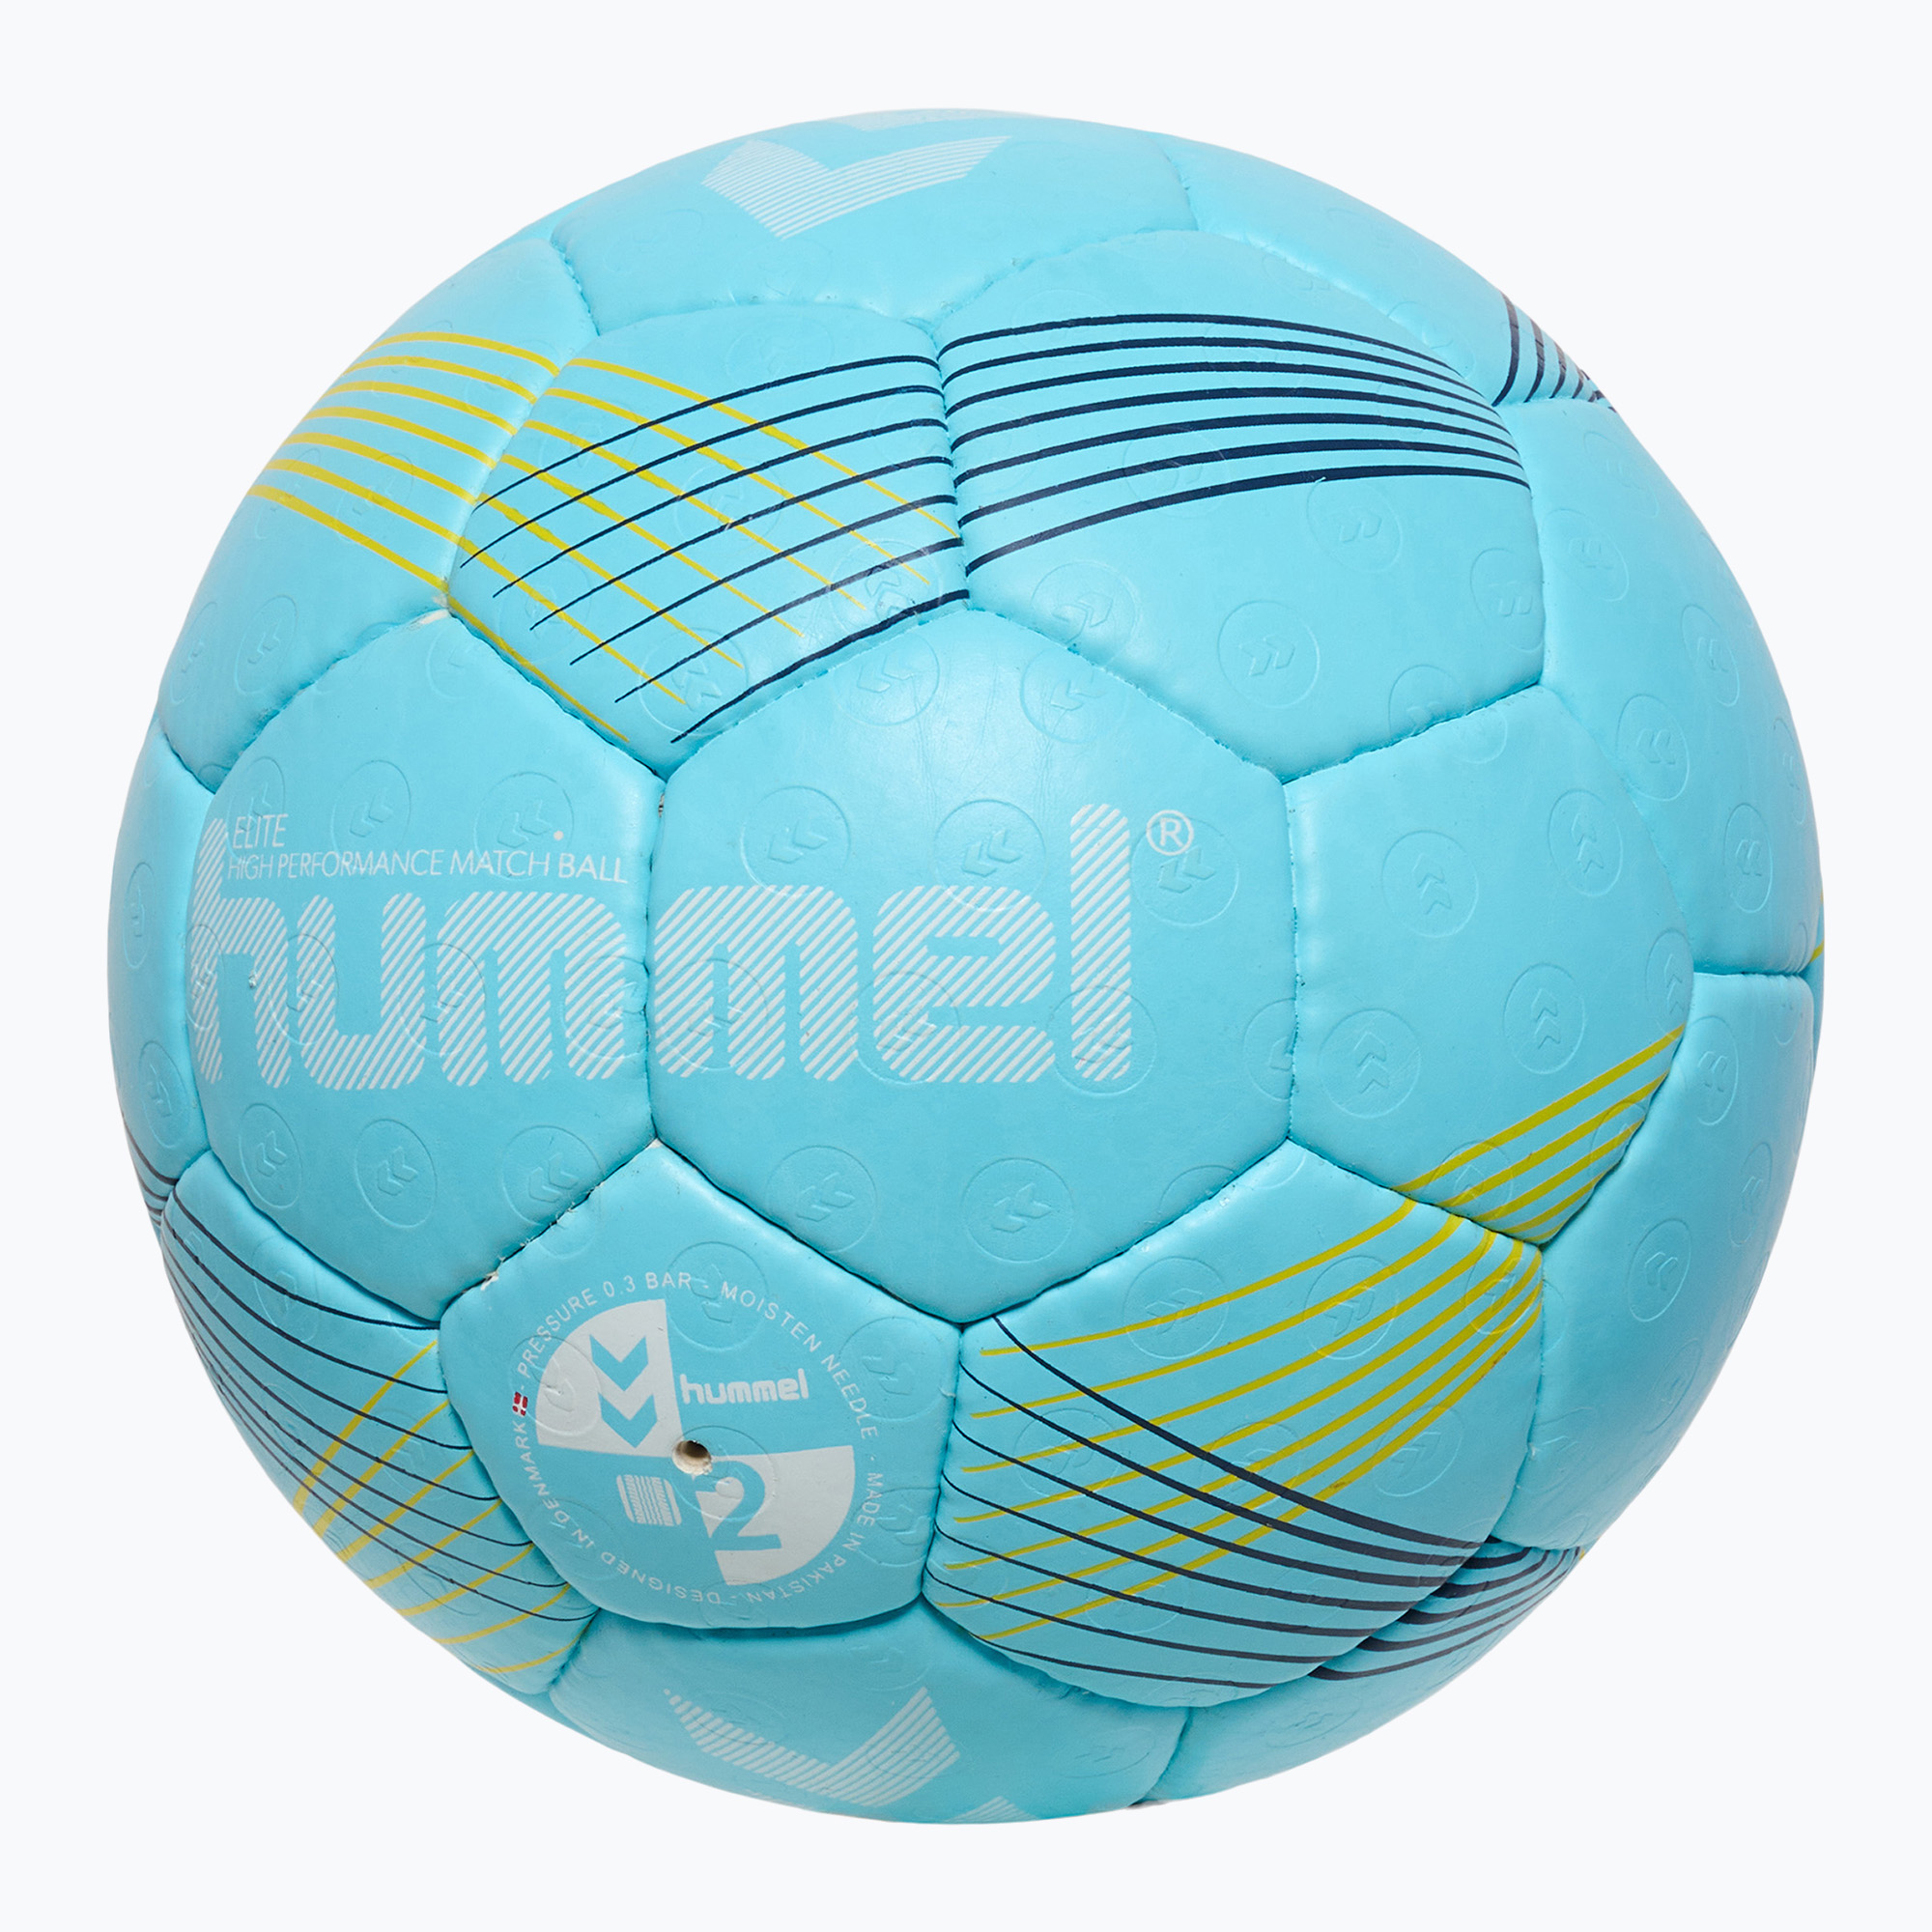 Hummel Elite HB handball blue/white/yellow size 3